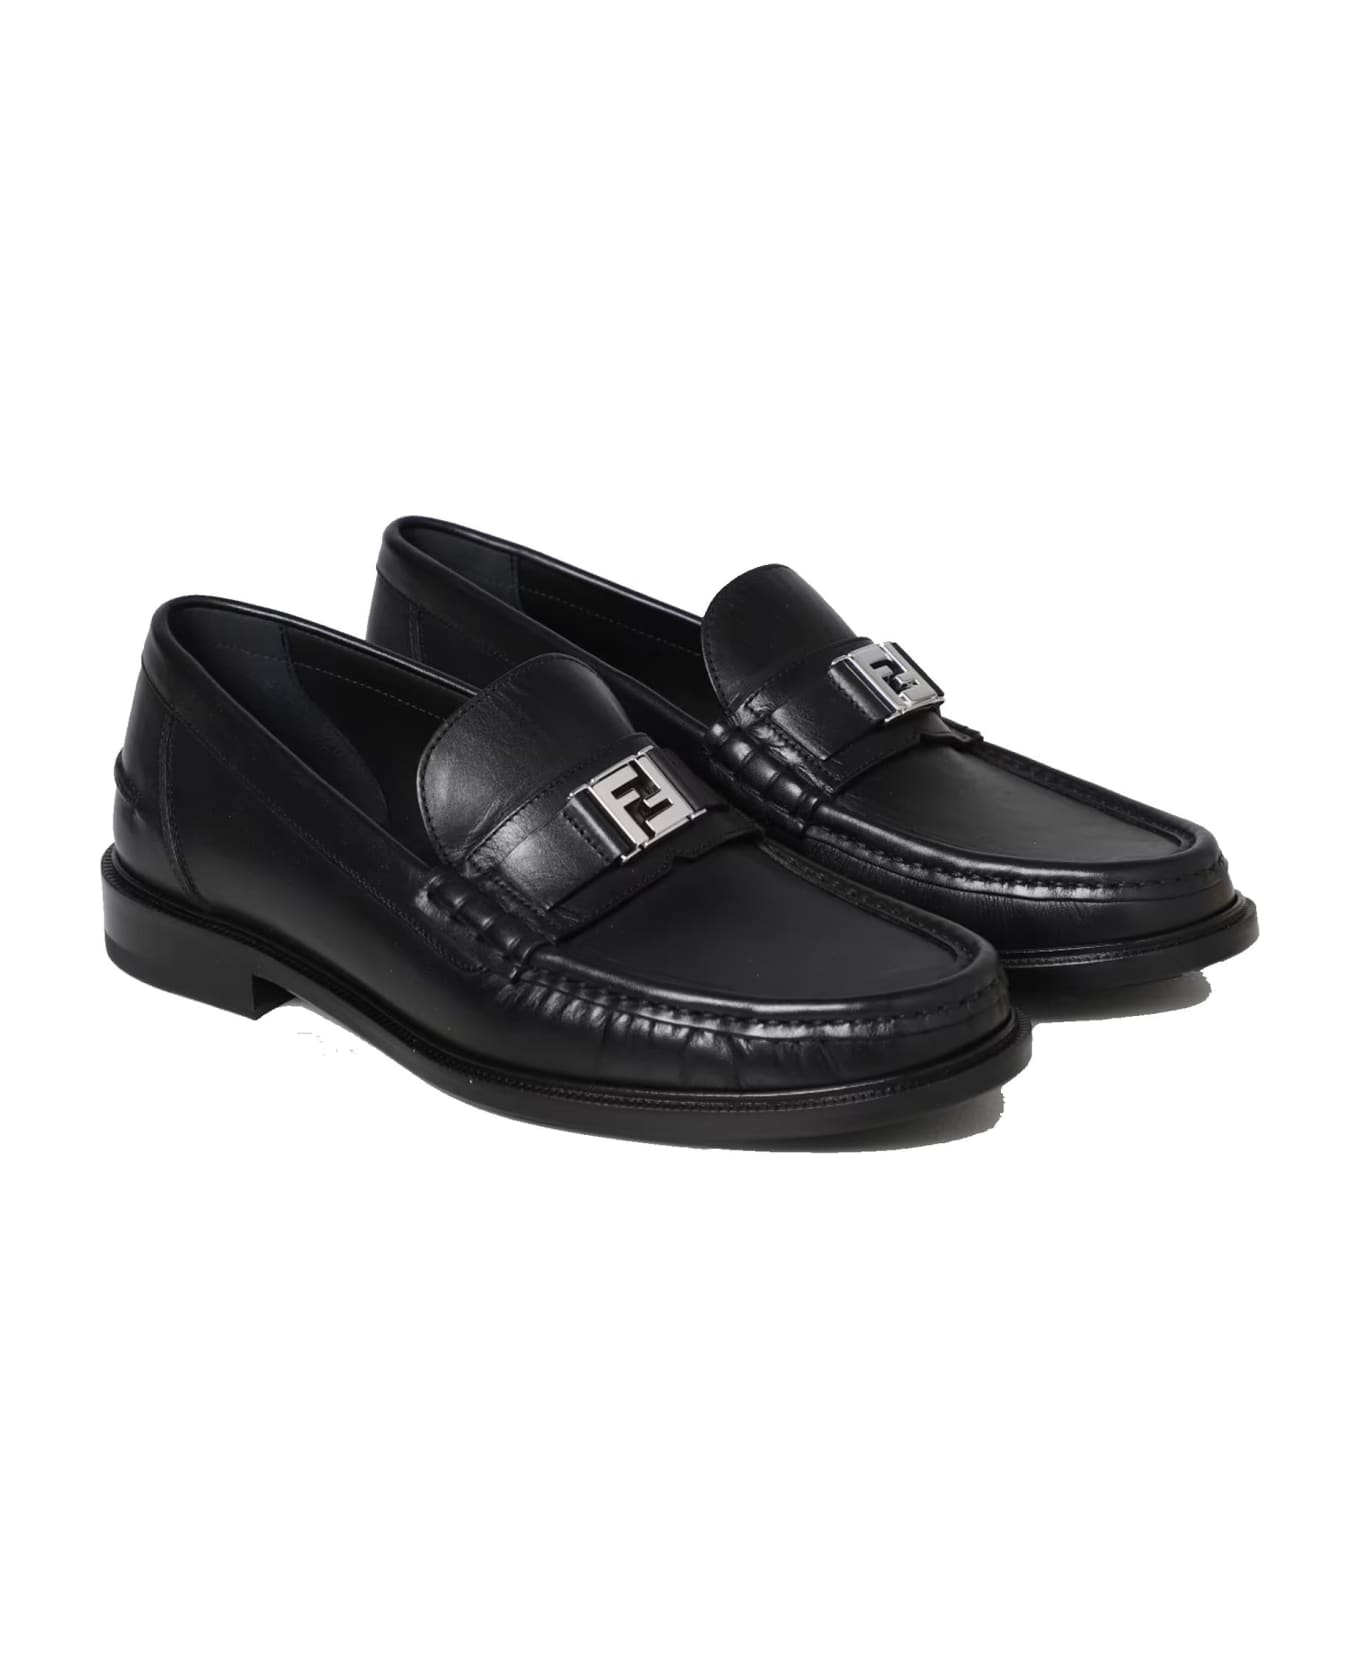 Fendi Ff Leather Loafers - Black